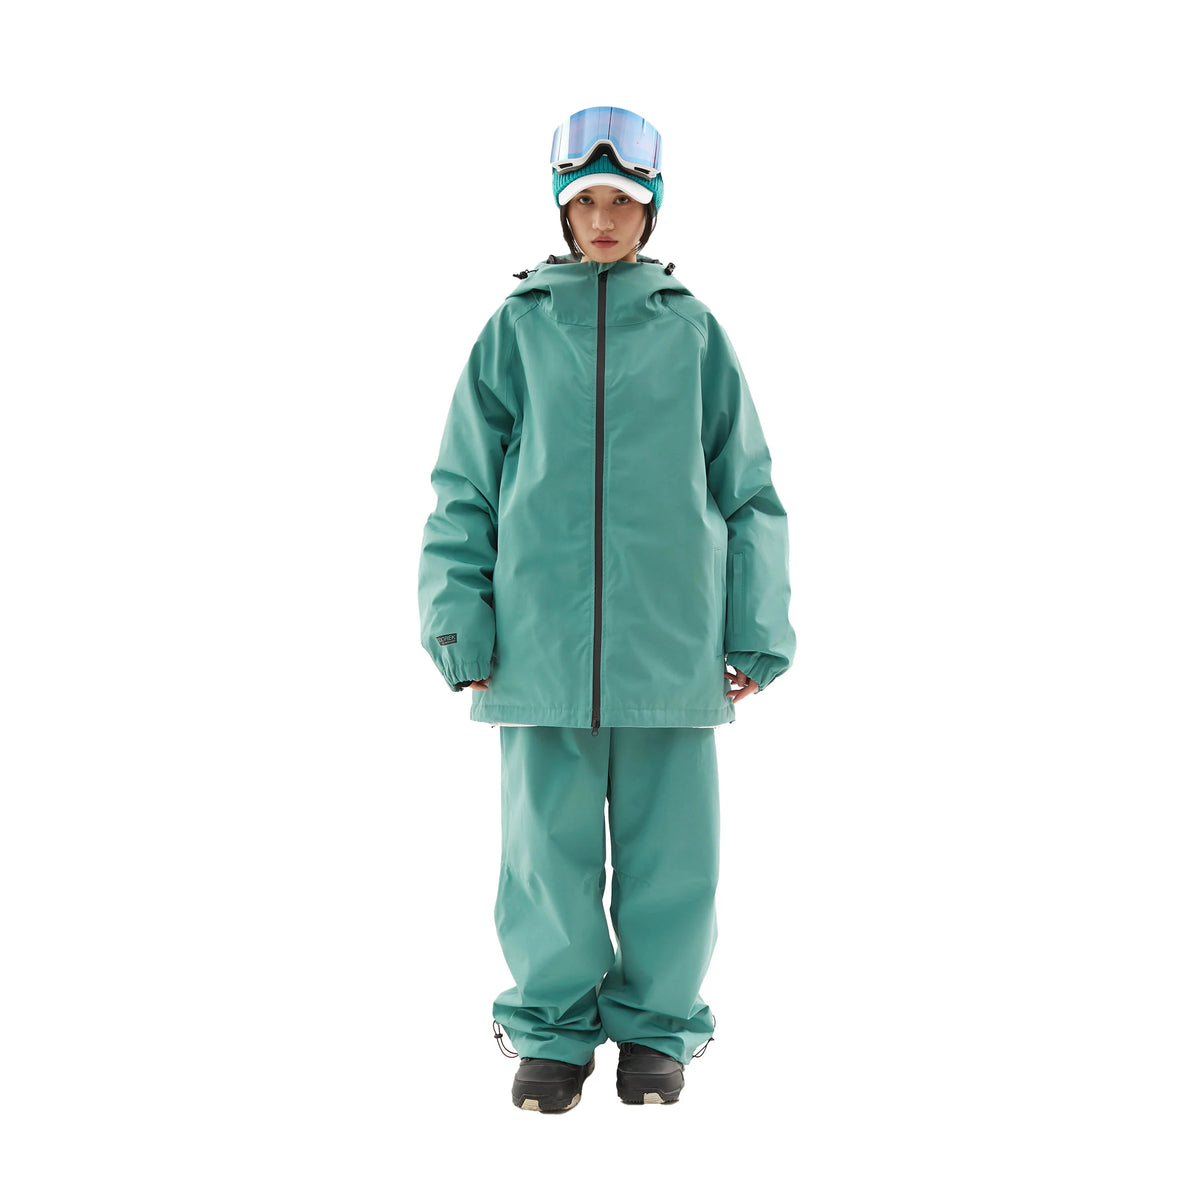 DOOREK New Single Board Double Board Ski Suit Set for Men's and Women's Equipment with Cotton Waterproof Korean Loose Size